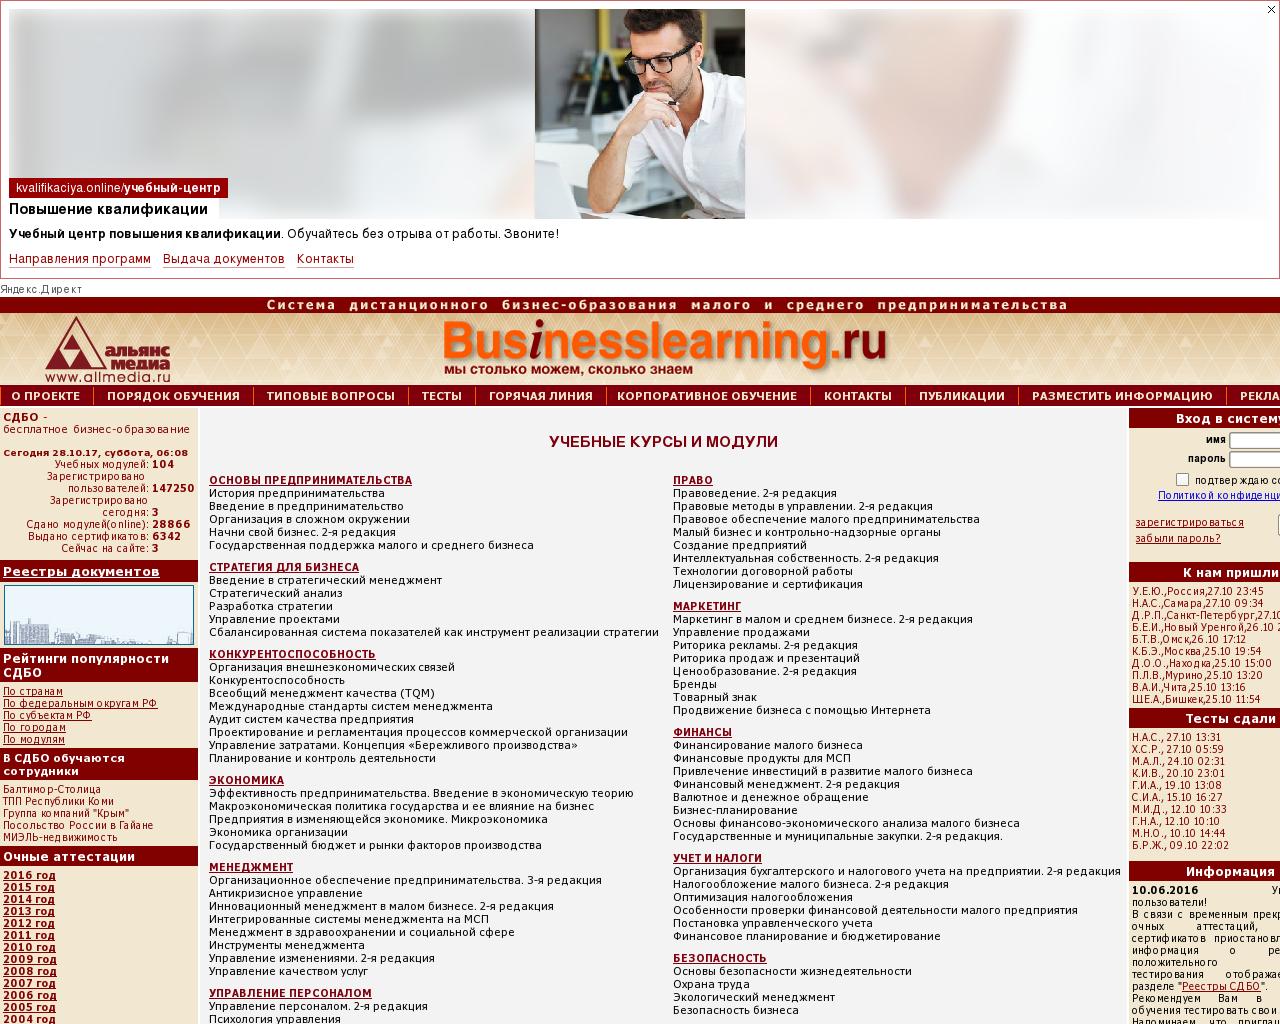 Изображение сайта businesslearning.ru в разрешении 1280x1024